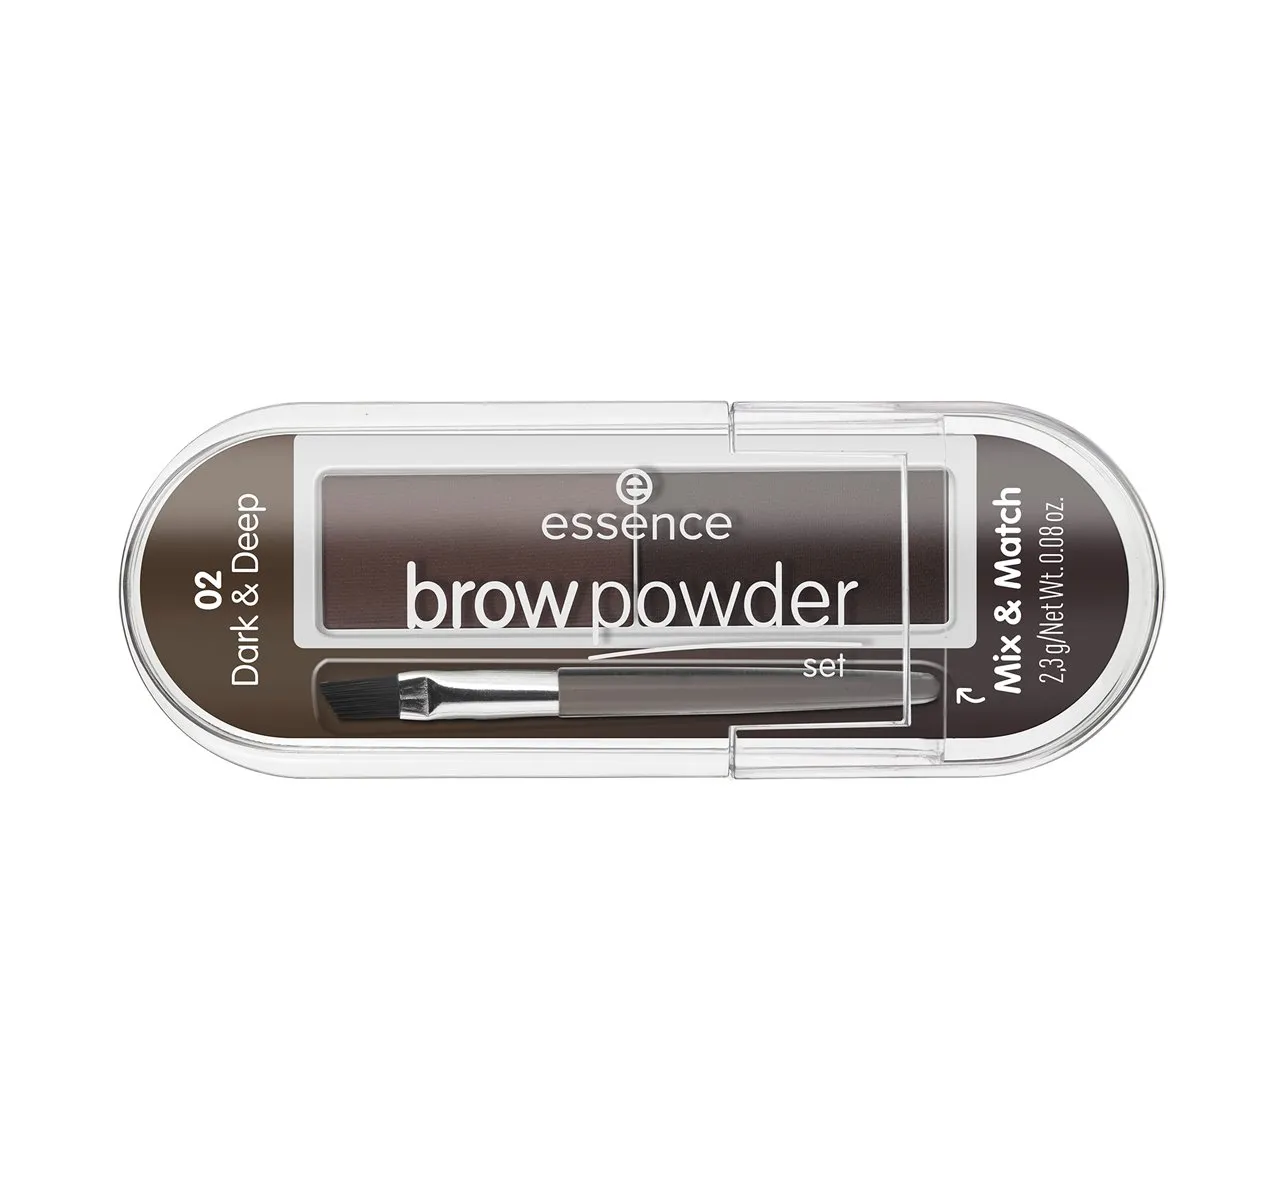 Eyebrow powder set - 02: Dark & Deep